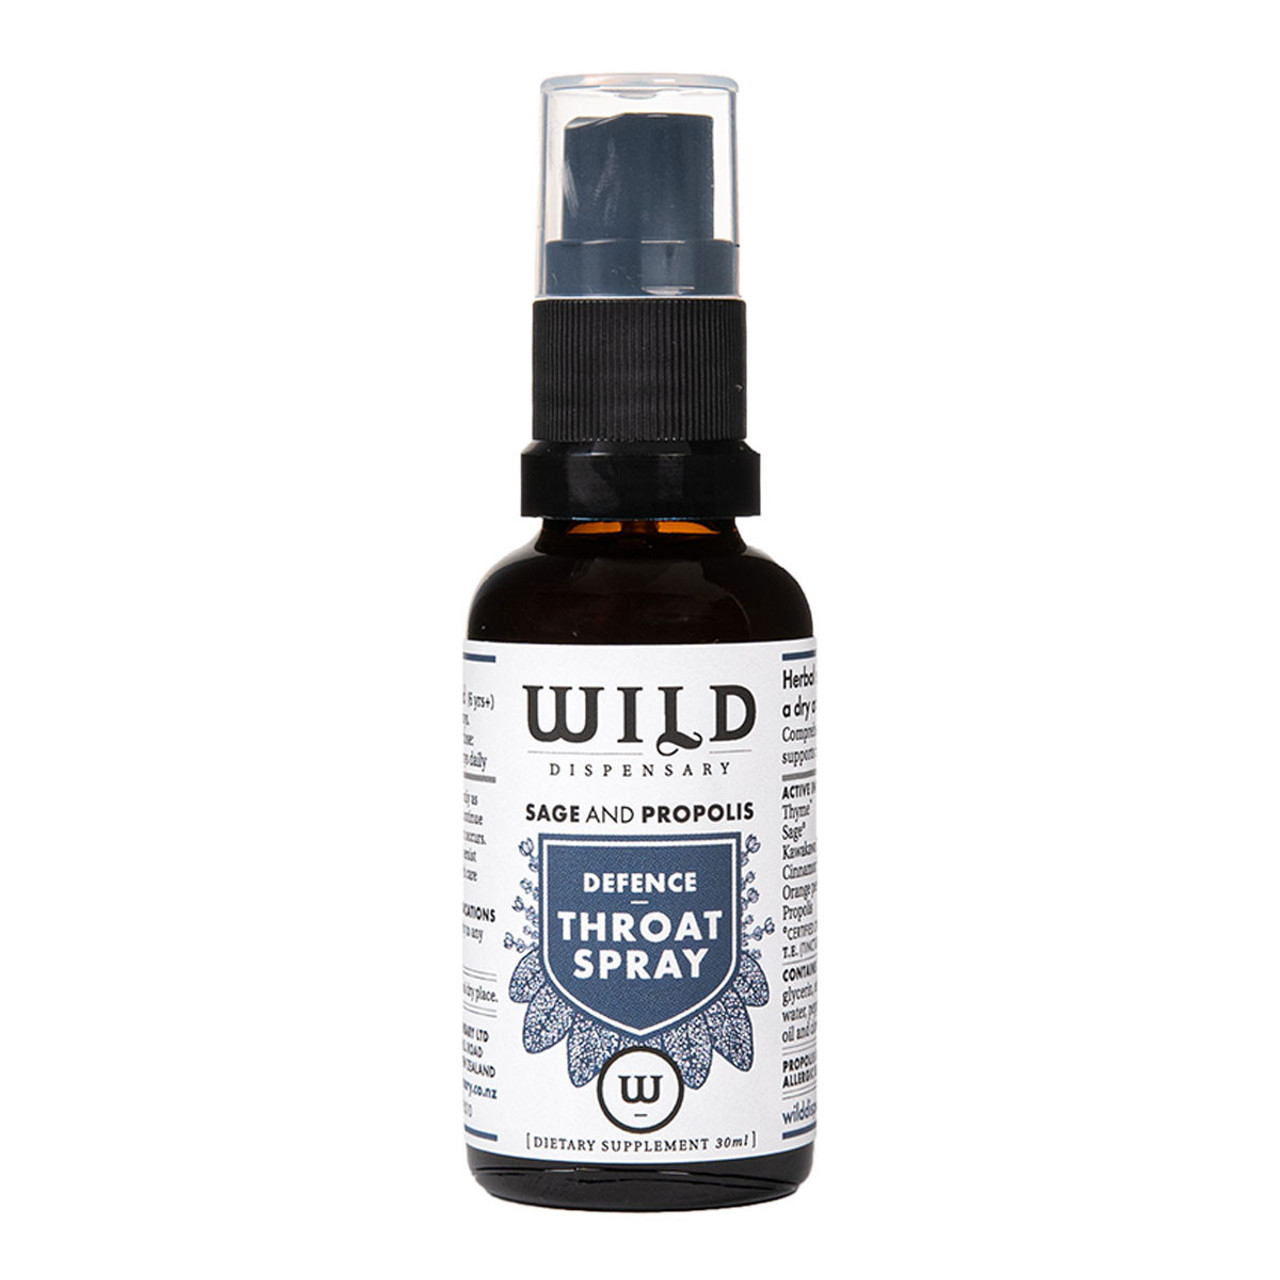 Wild Dispensary Throat Spray